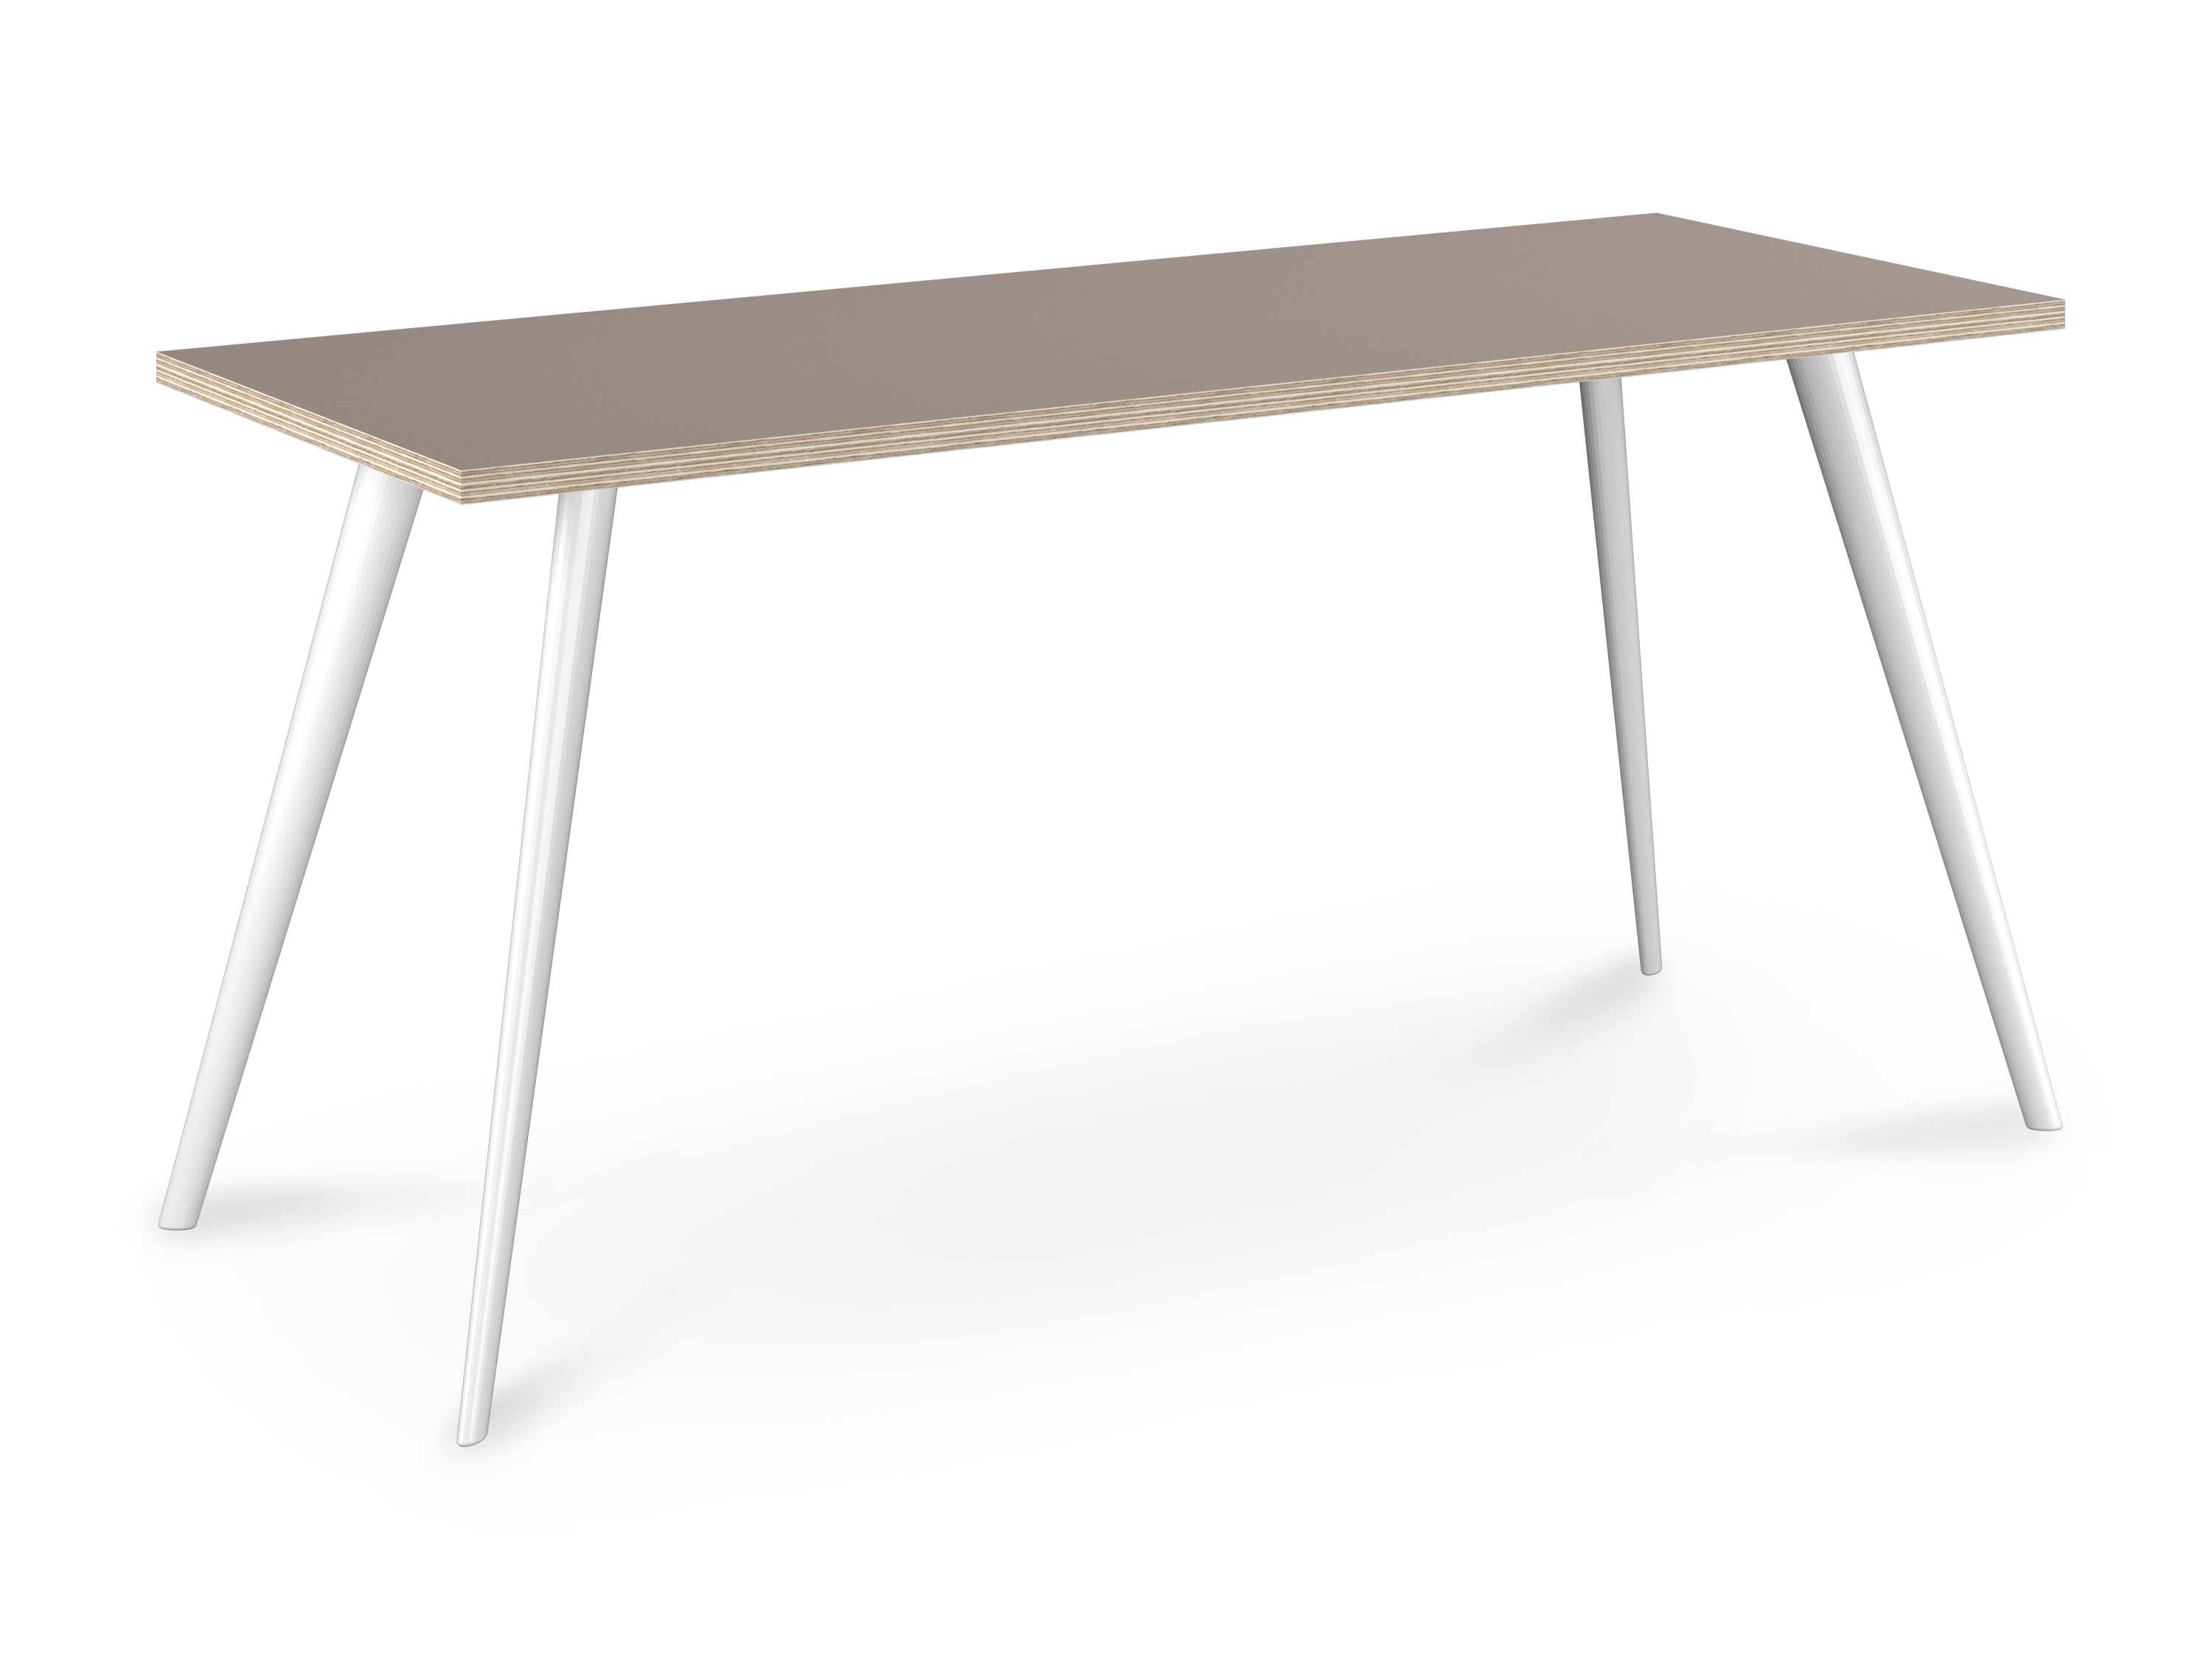 WS - Air desk - White legs, Stone Grey Acrylic Ply